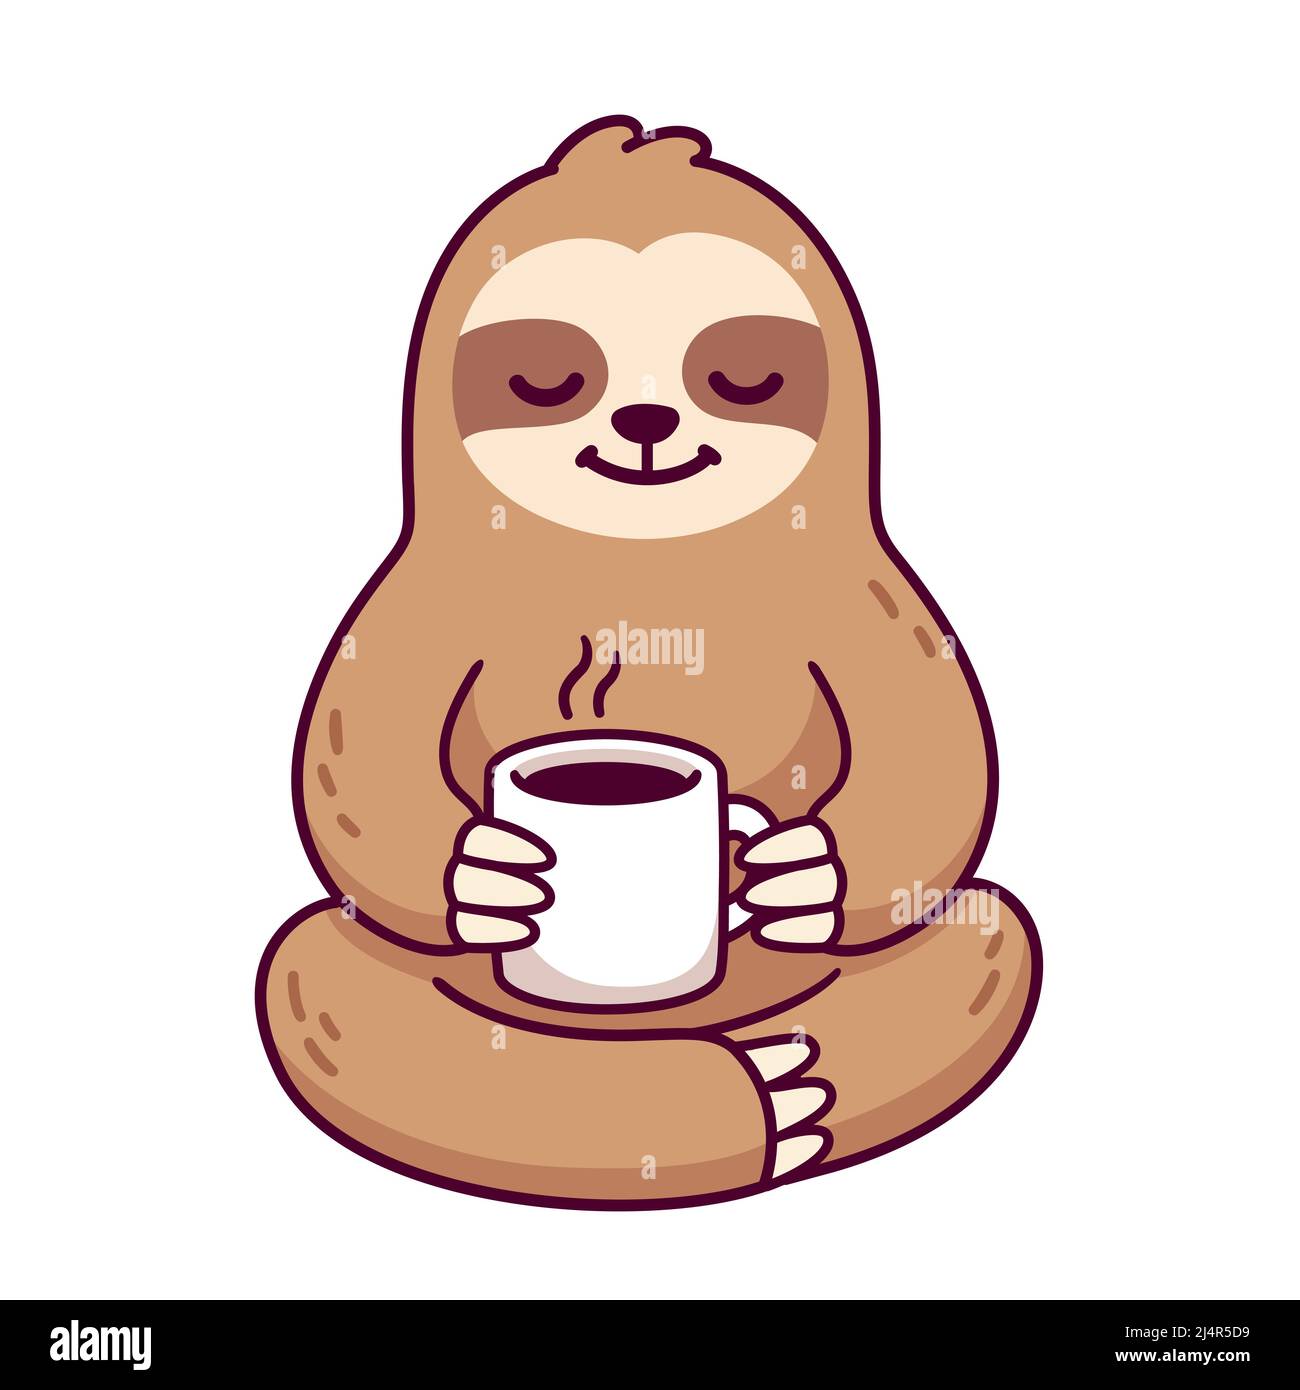 https://c8.alamy.com/comp/2J4R5D9/cute-cartoon-sloth-with-cup-of-coffee-or-tea-funny-cartoon-character-vector-clip-art-illustration-2J4R5D9.jpg